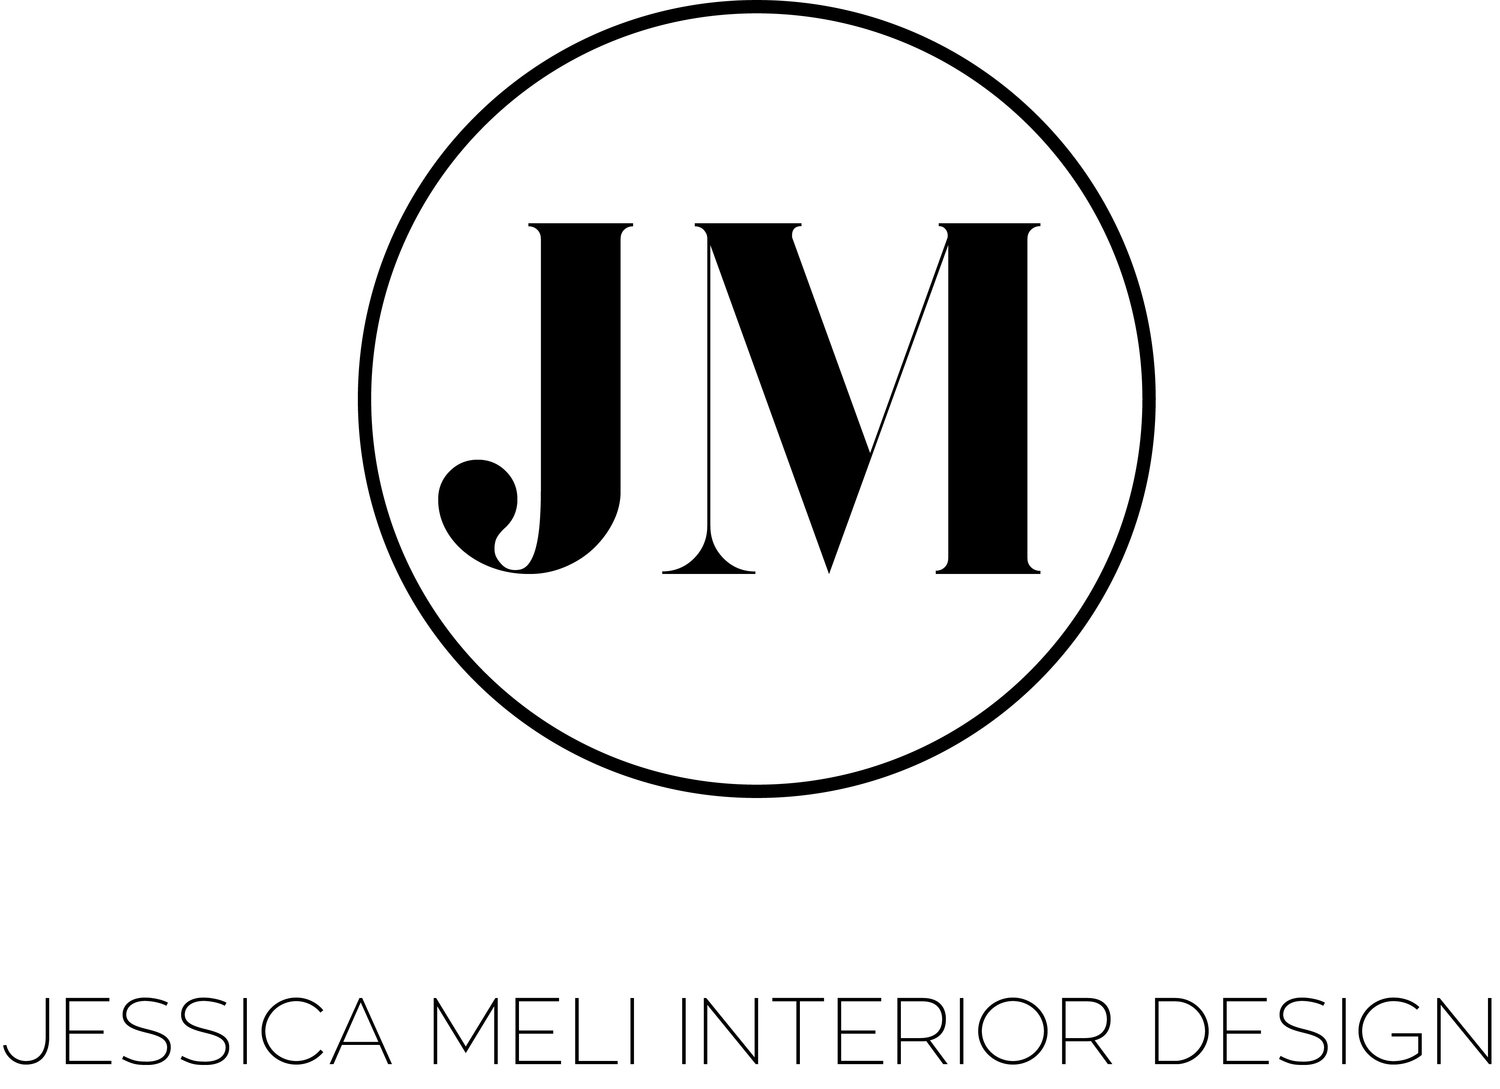 Jessica Meli Interior Design